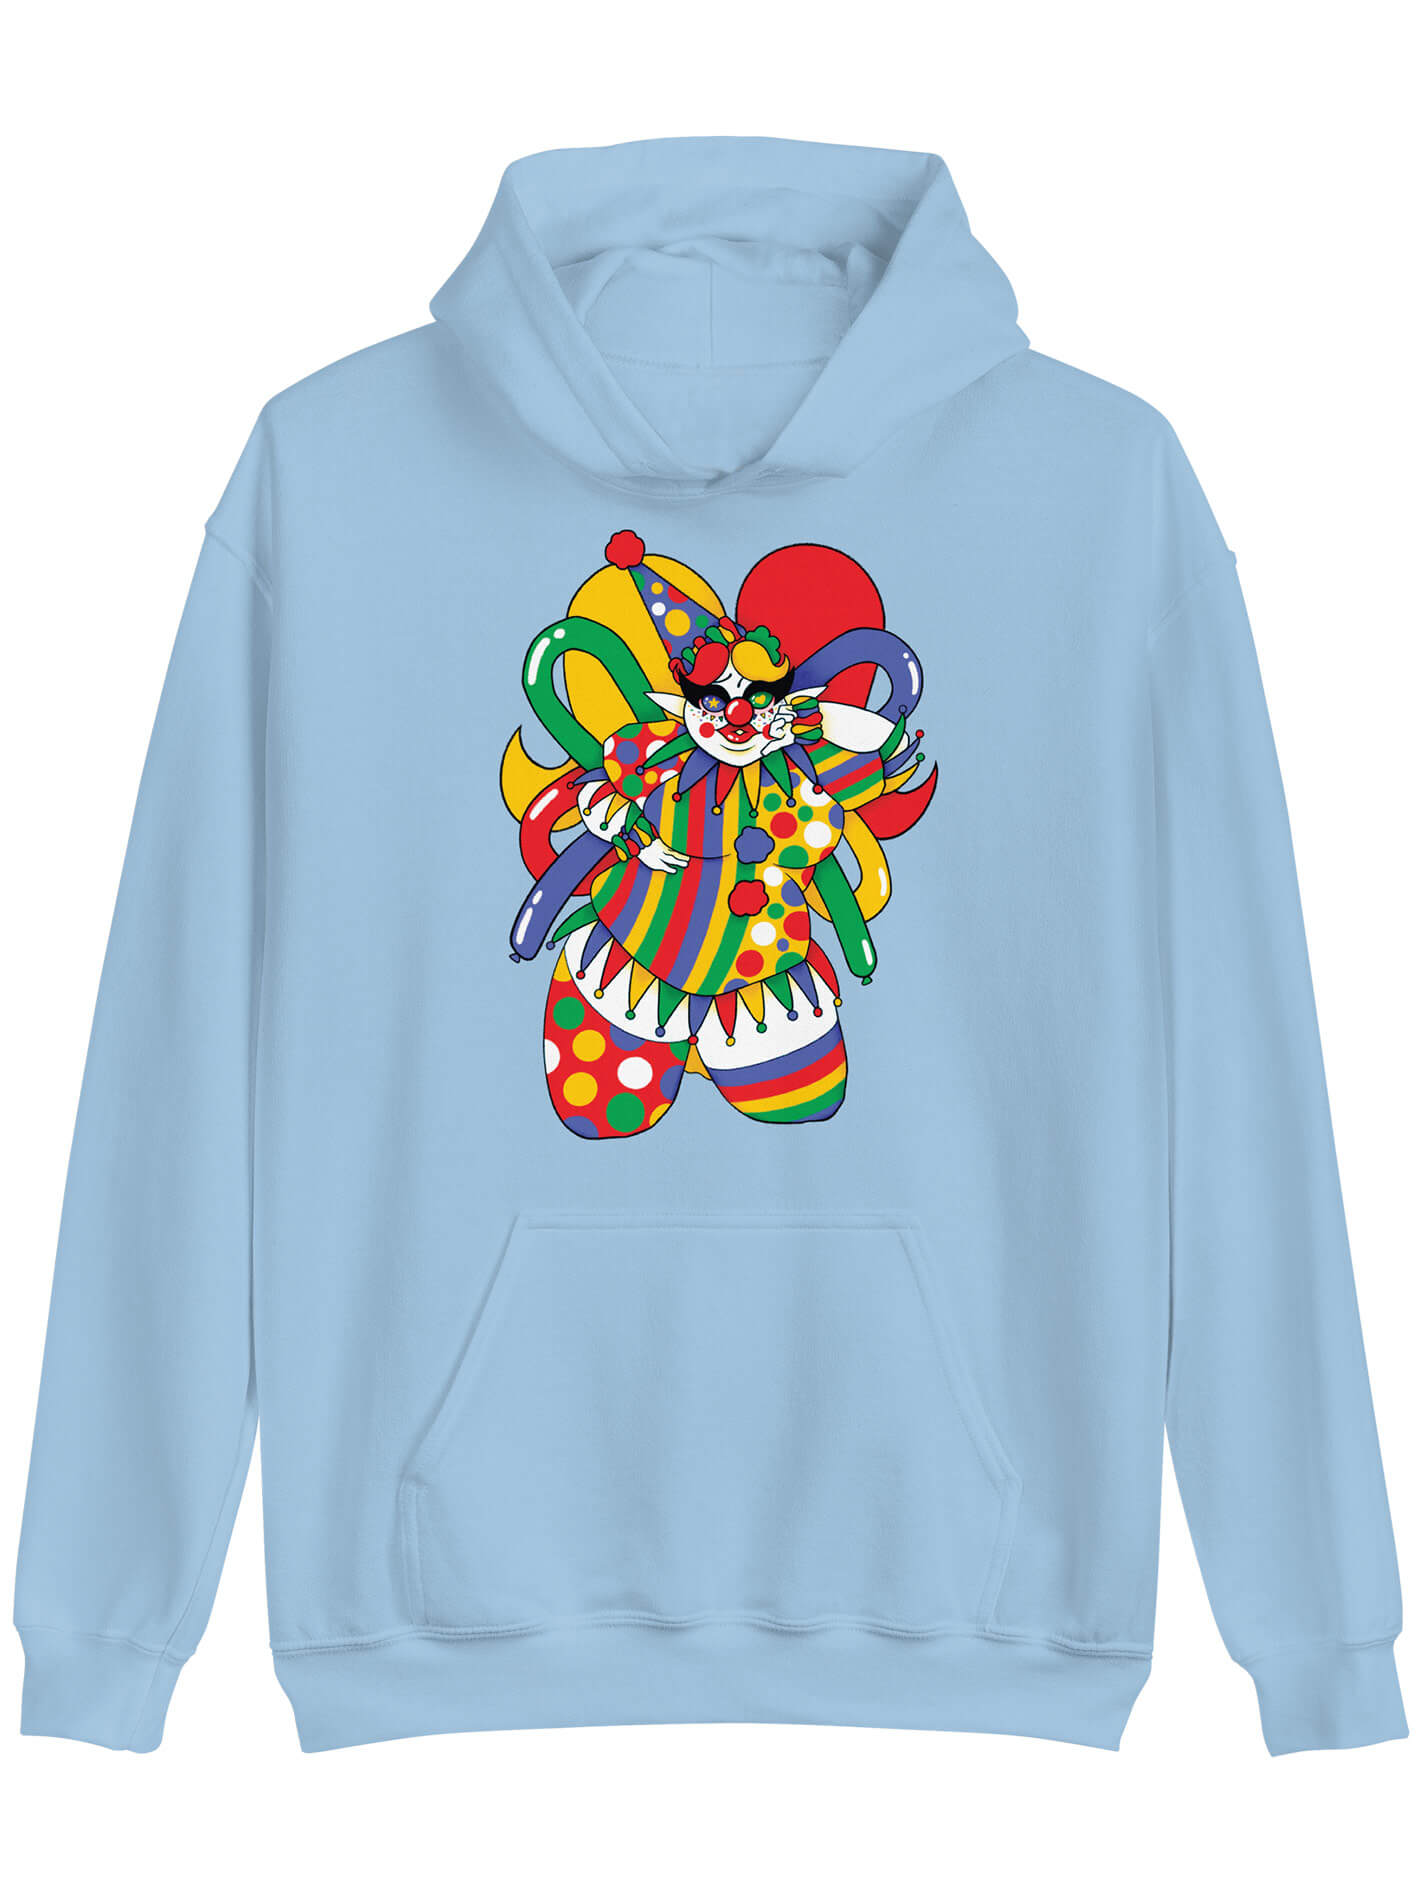 Clowncore fairy hoodie.